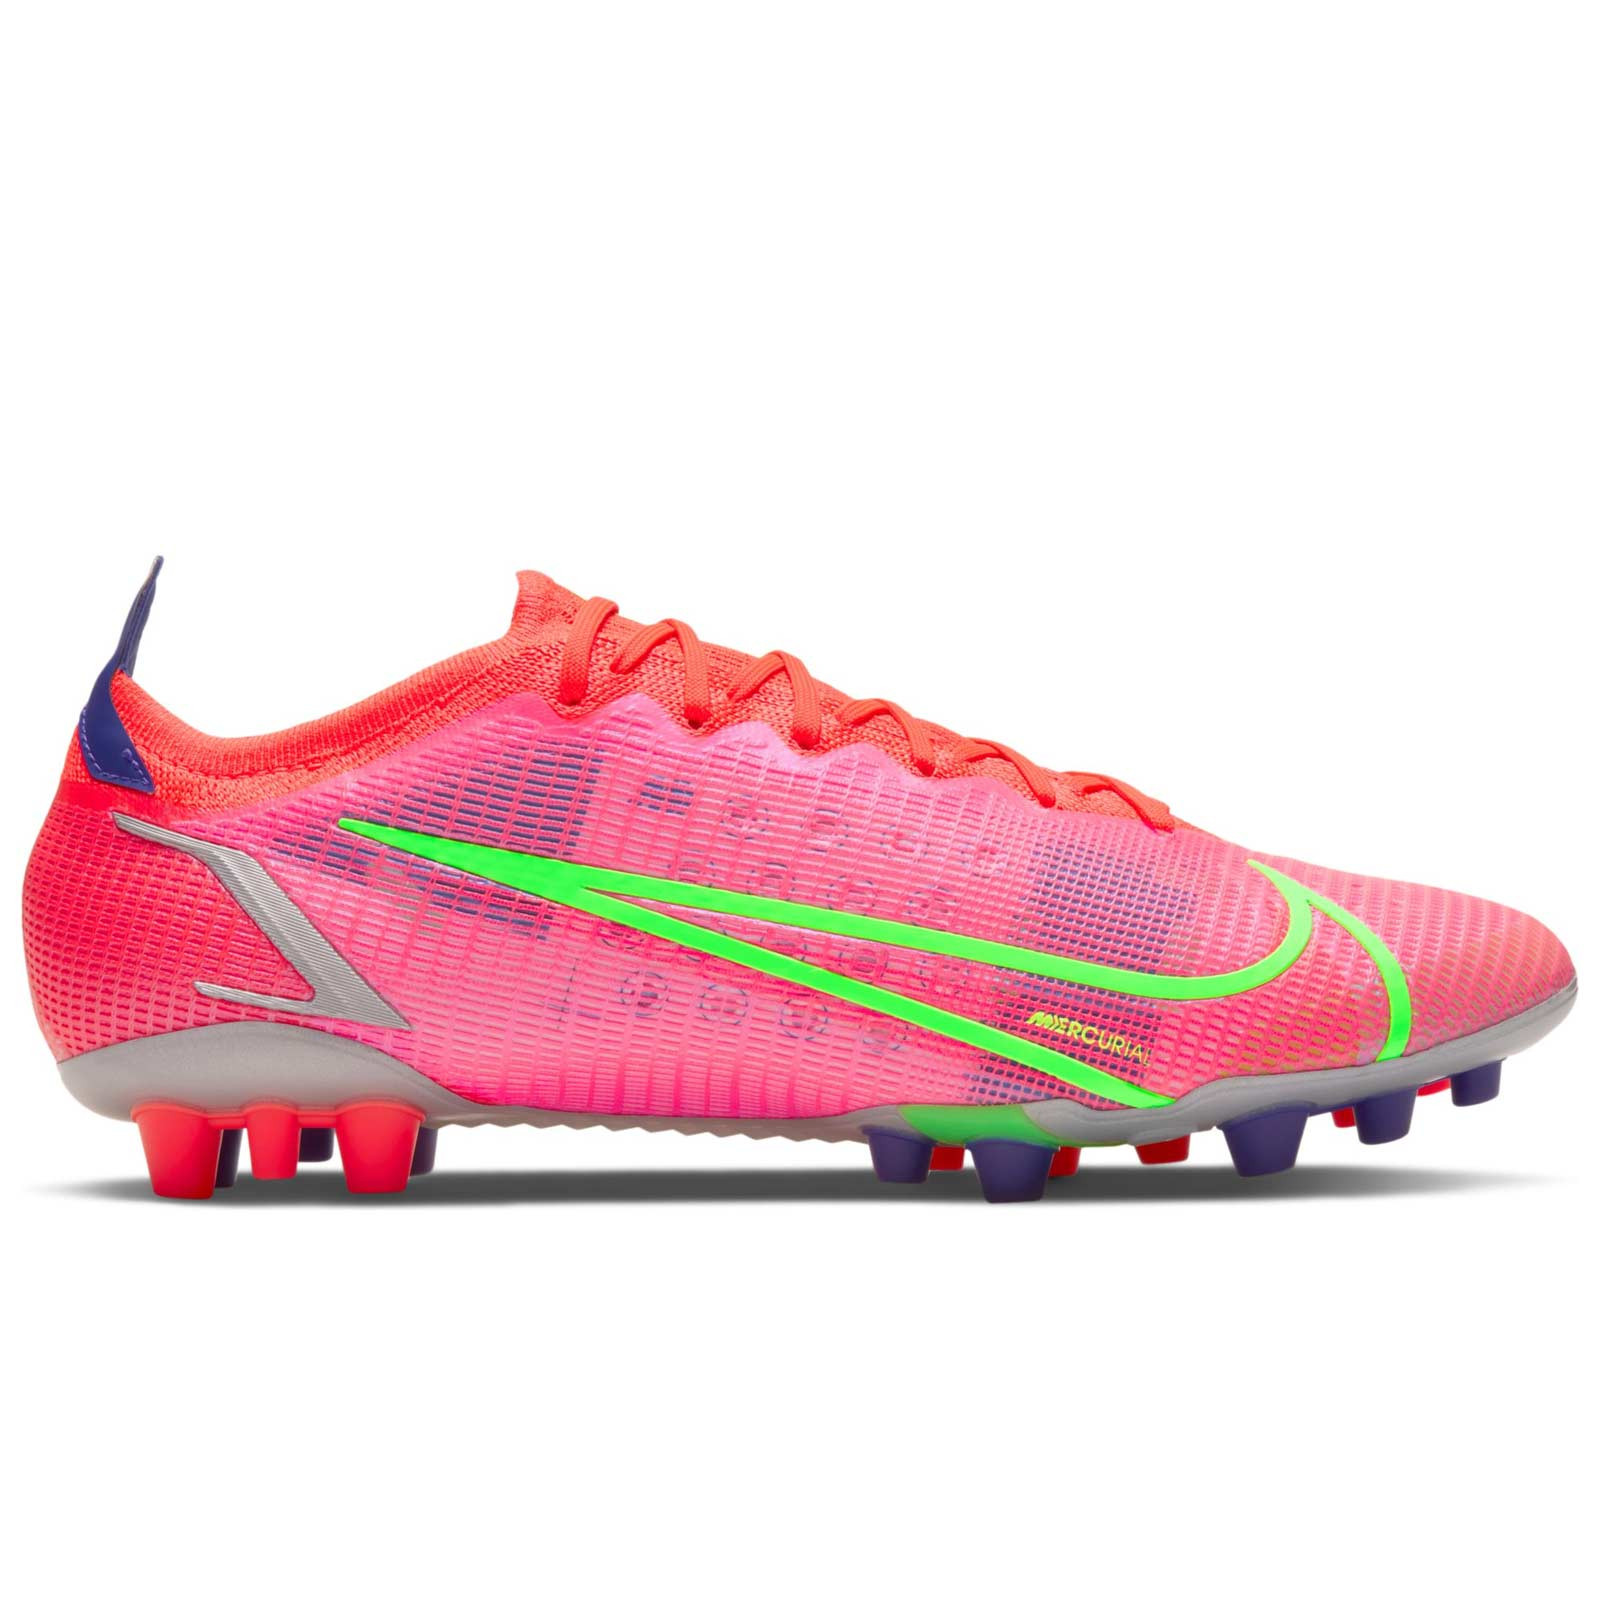 AG Soccer Cleats - White, Pink and Black Nike Mercurial Vapor 14 Elite